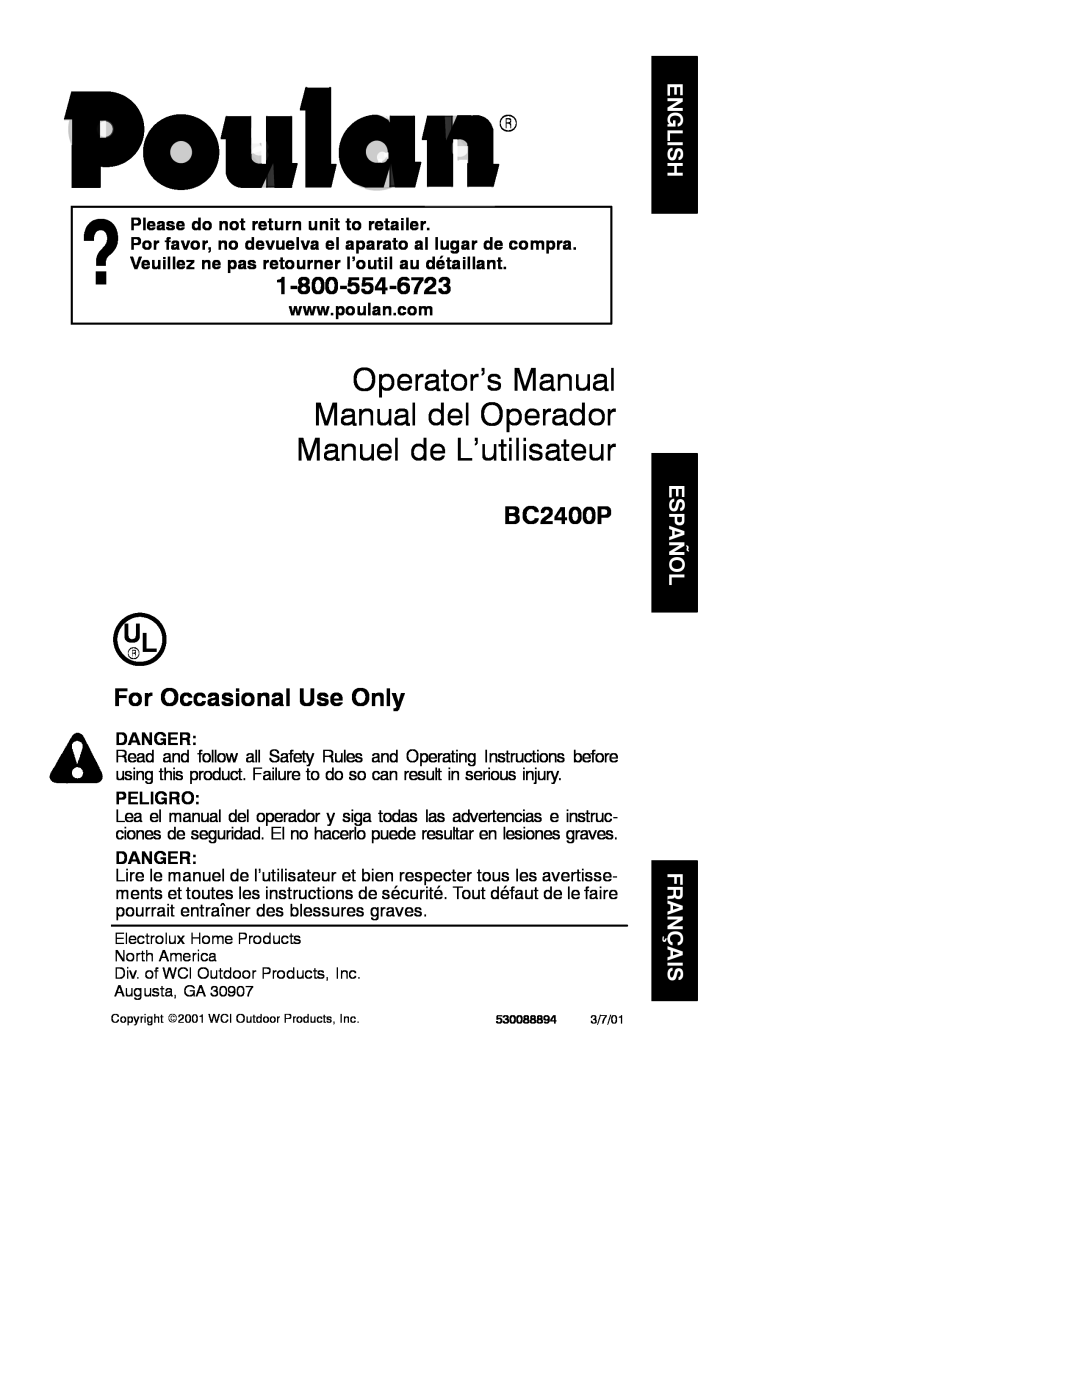 Poulan BC2400P manual Operator’s Manual Manual del Operador, Manuel de L’utilisateur, For Occasional Use Only, Danger 